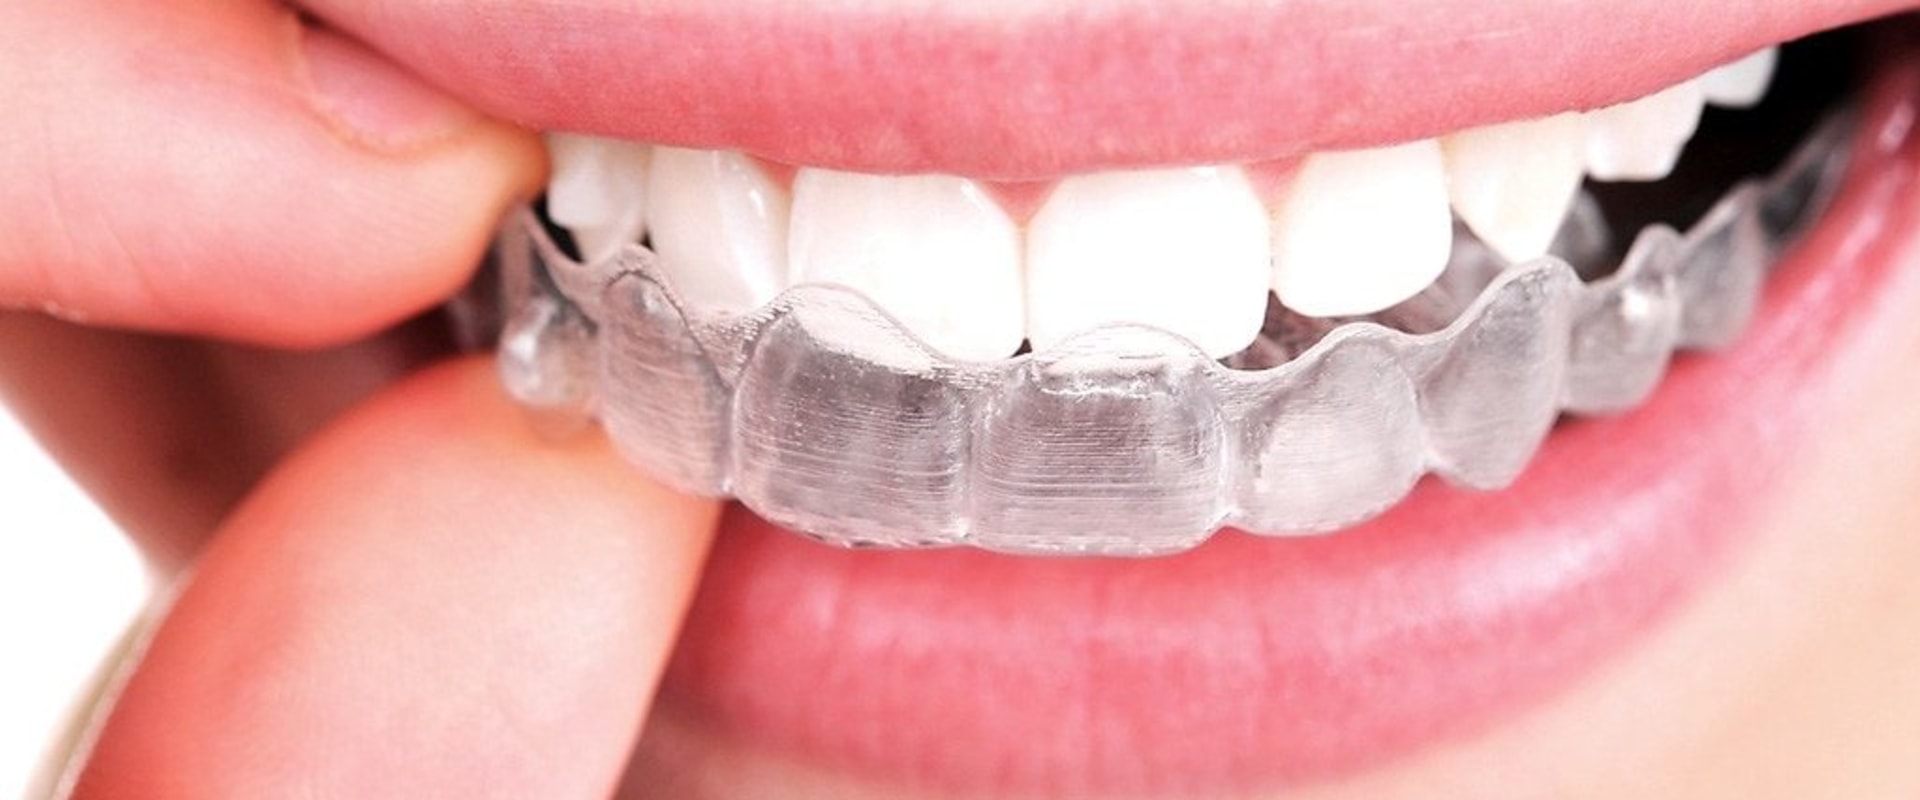 Alternative Treatments for Teeth Straightening